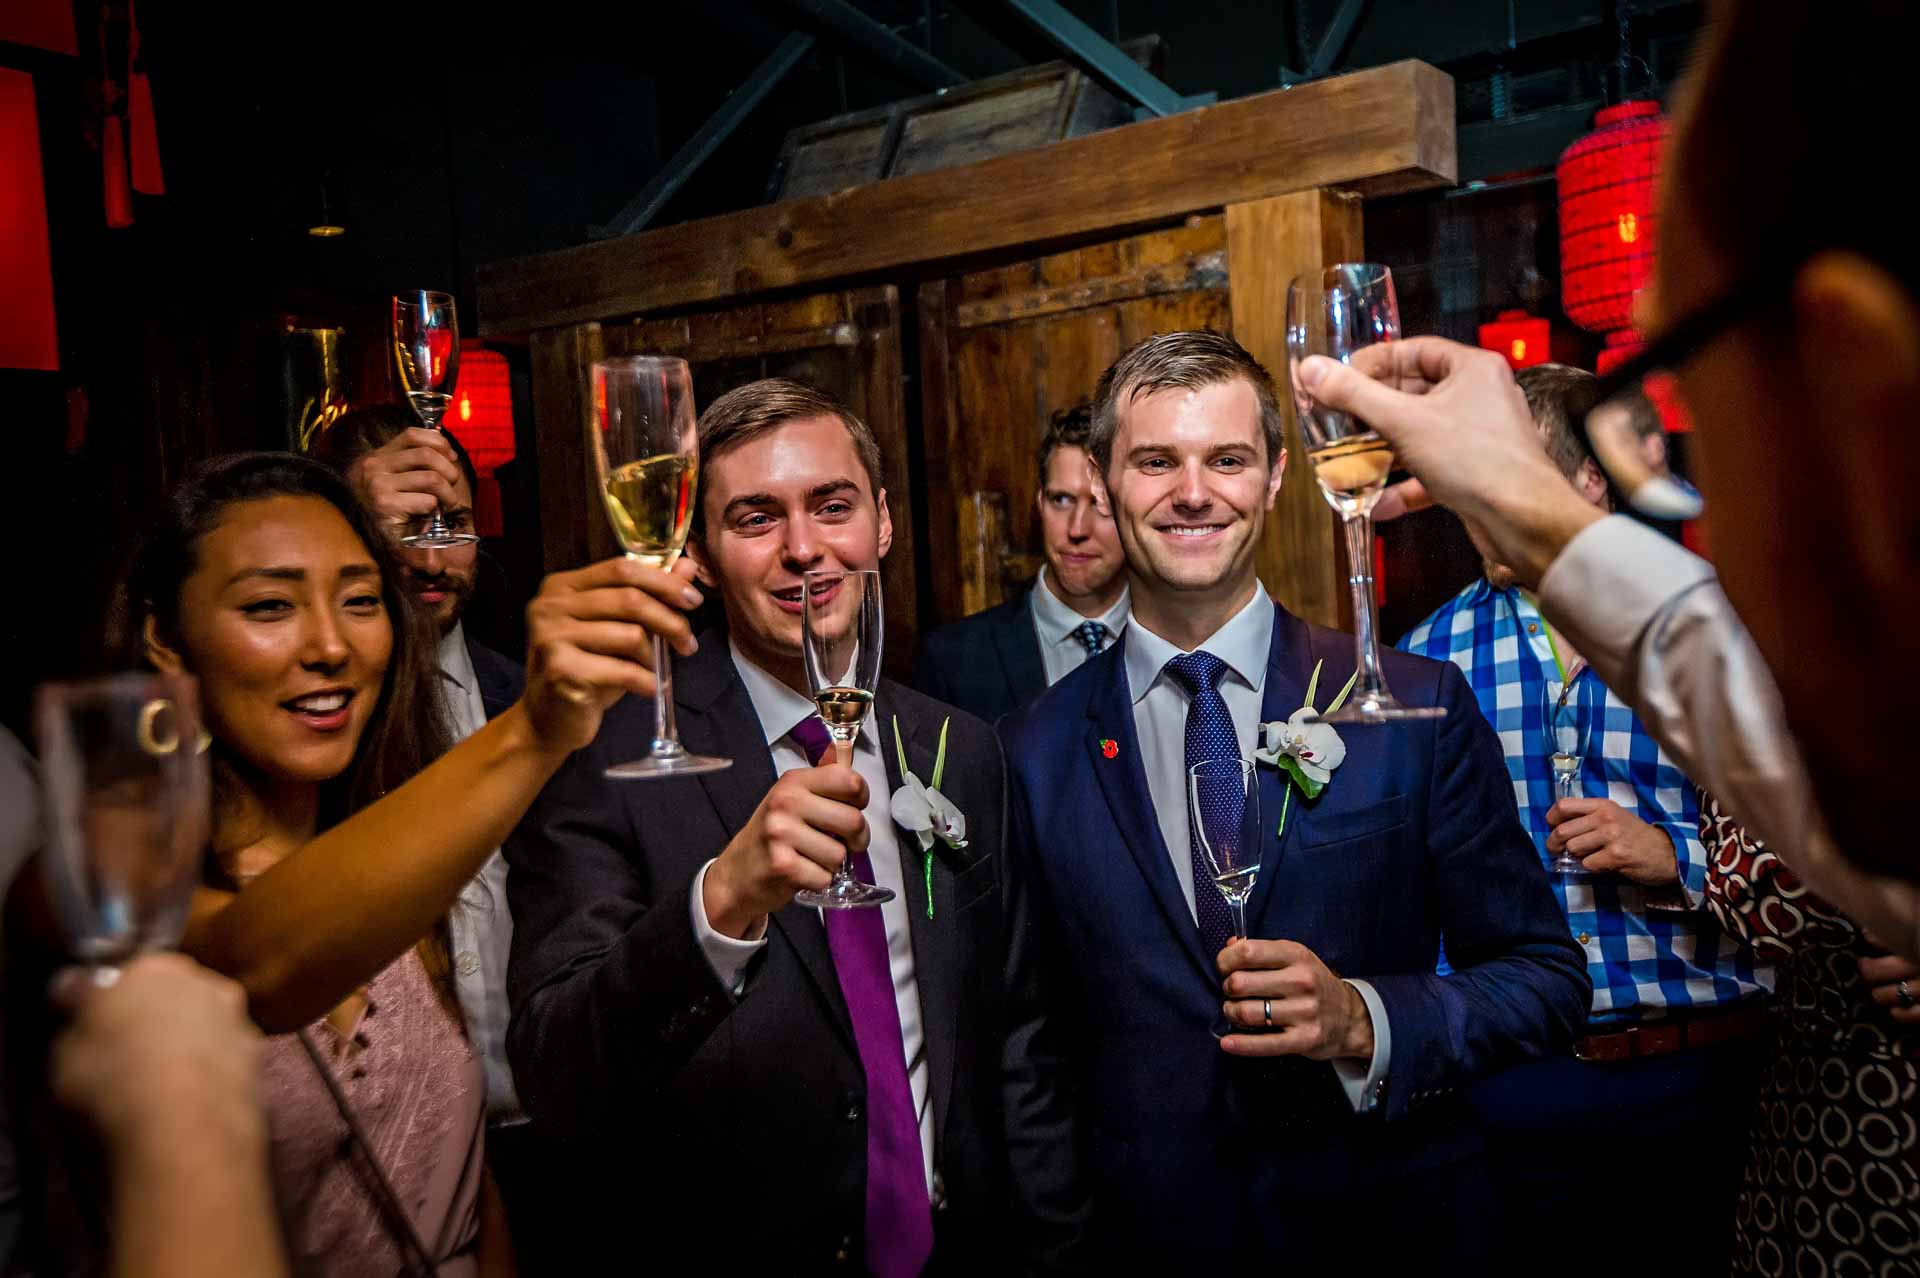 Guests at wedding toasting gay couple